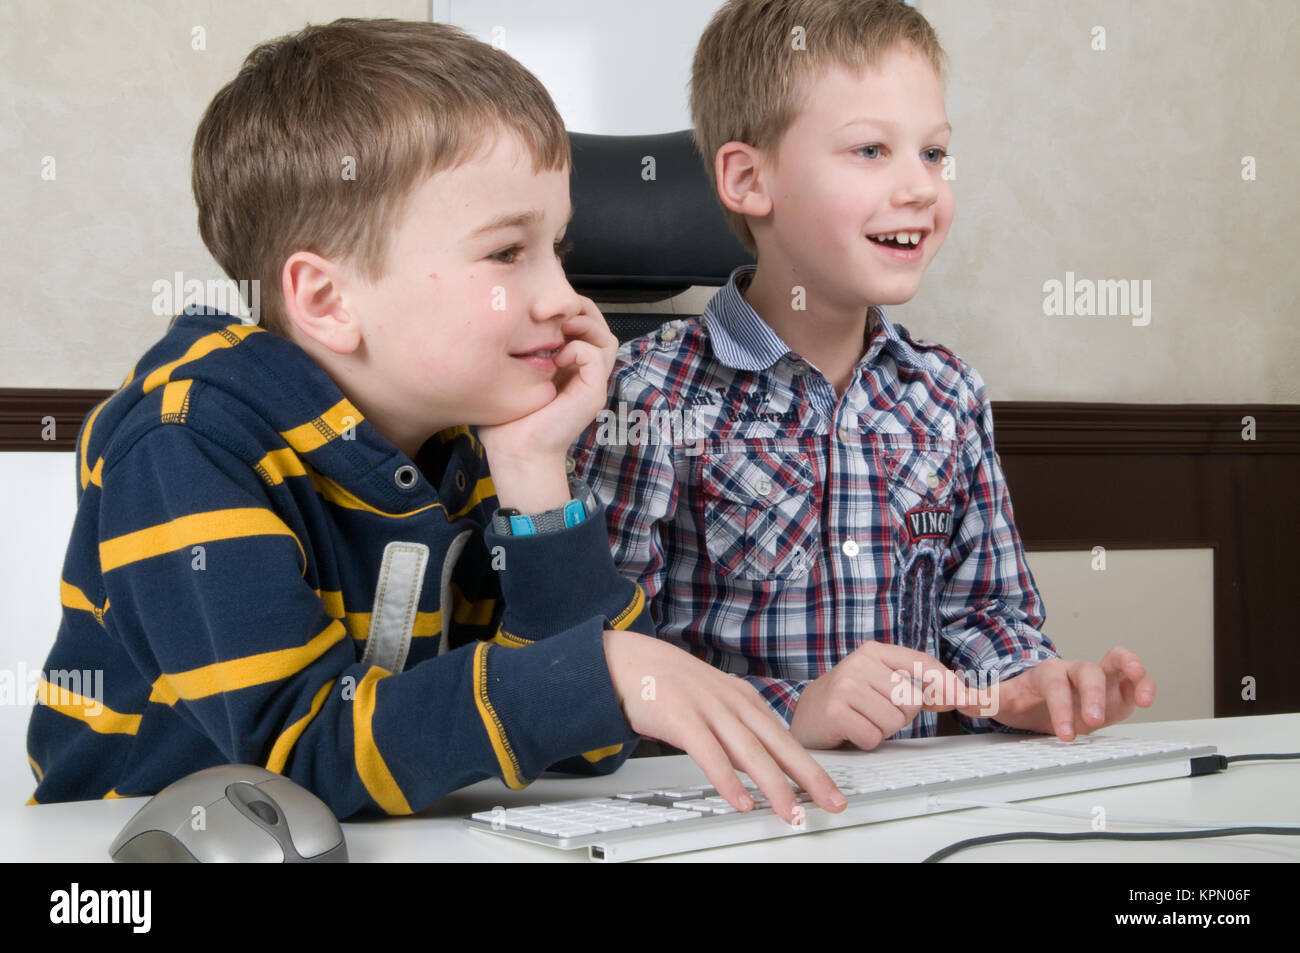 Boys on a computer Stock Photo